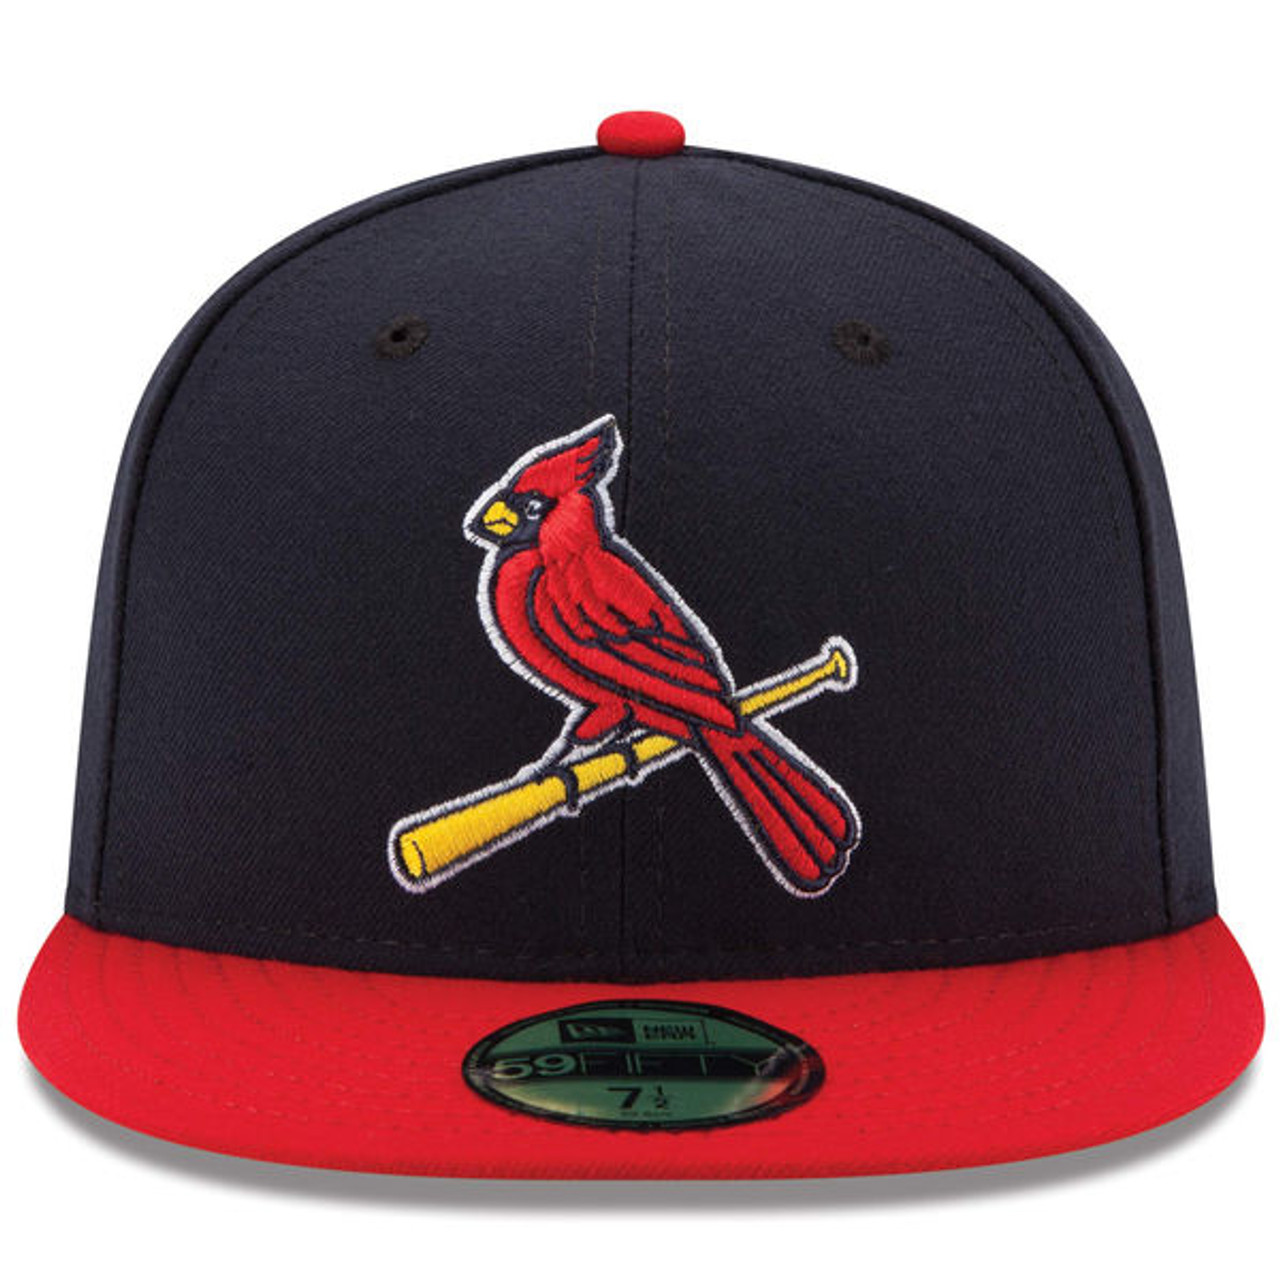 St. Louis Cardinals Baseball Flag 3/4 Red Sleeve Raglan 18M